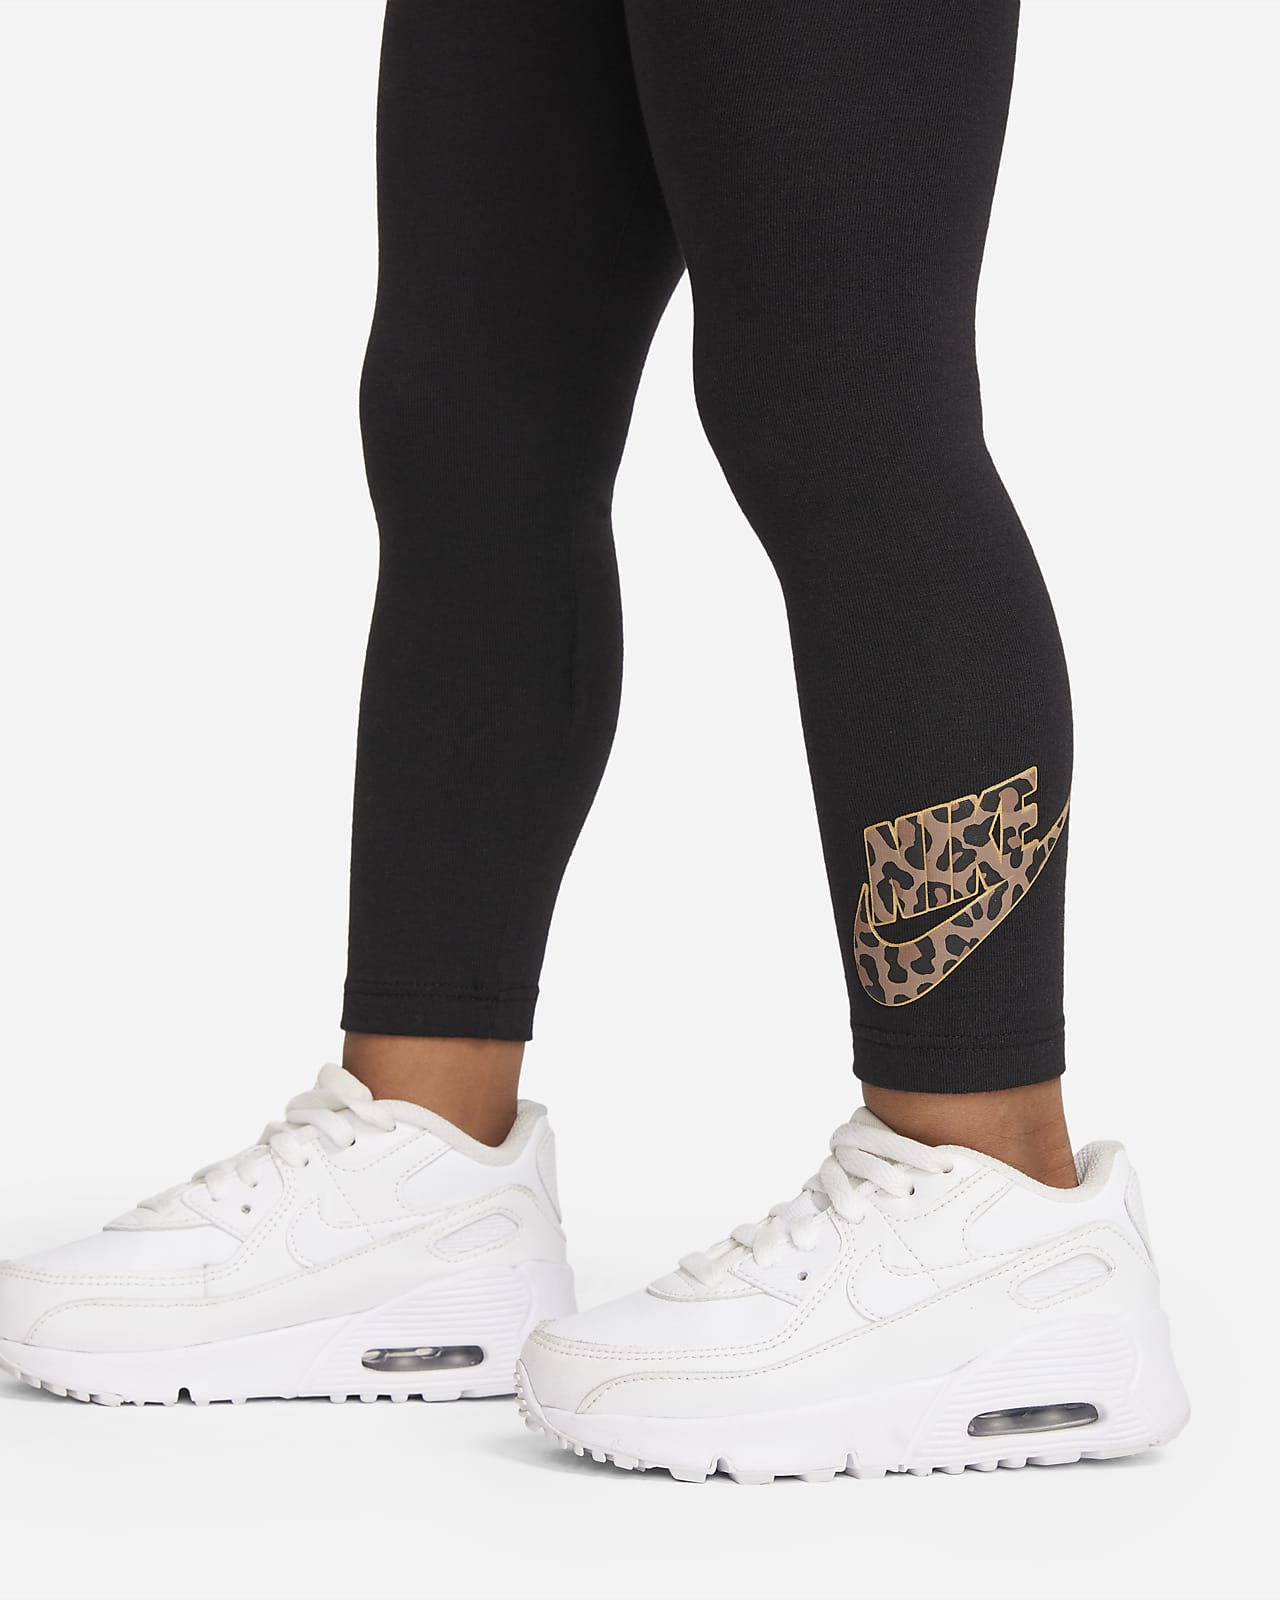 Baby Girl Nike Leopard Leggings & Tunic Set